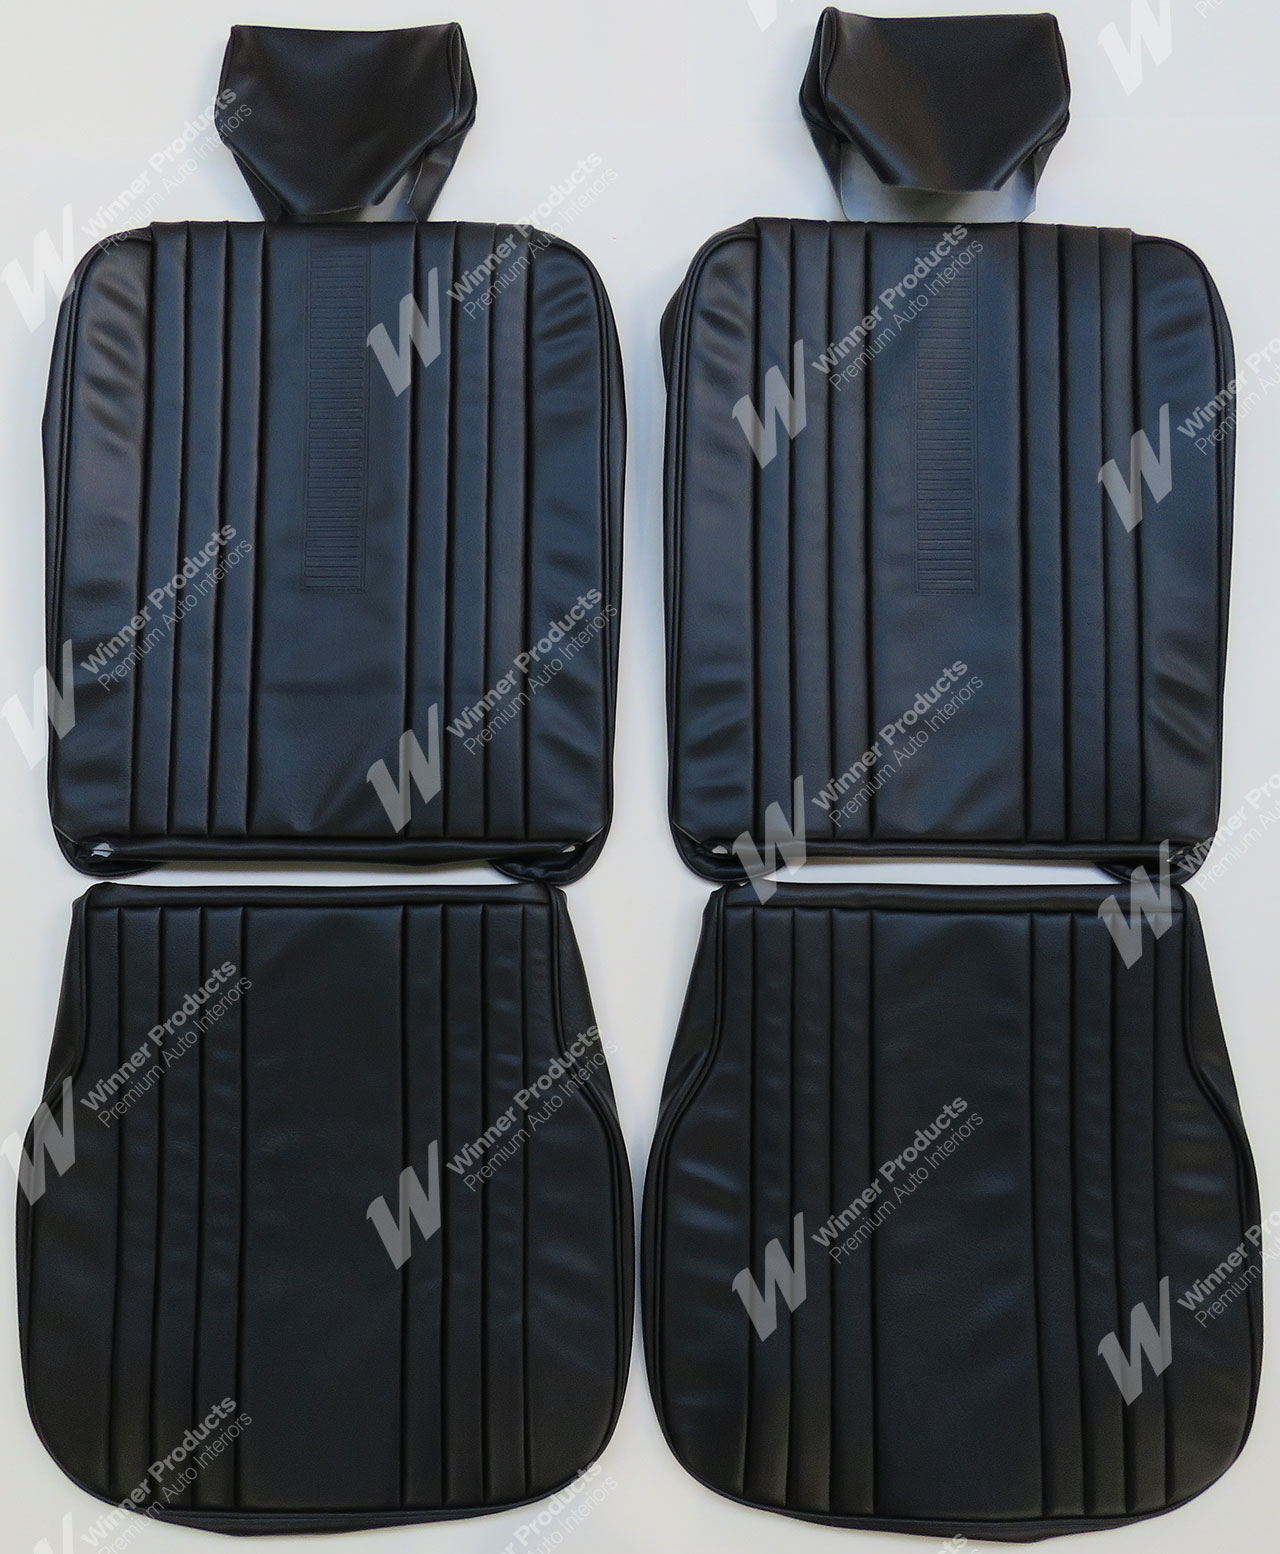 Valiant Regal VG Valiant Regal Hardtop X1 Black Seat Covers (Image 1 of 5)